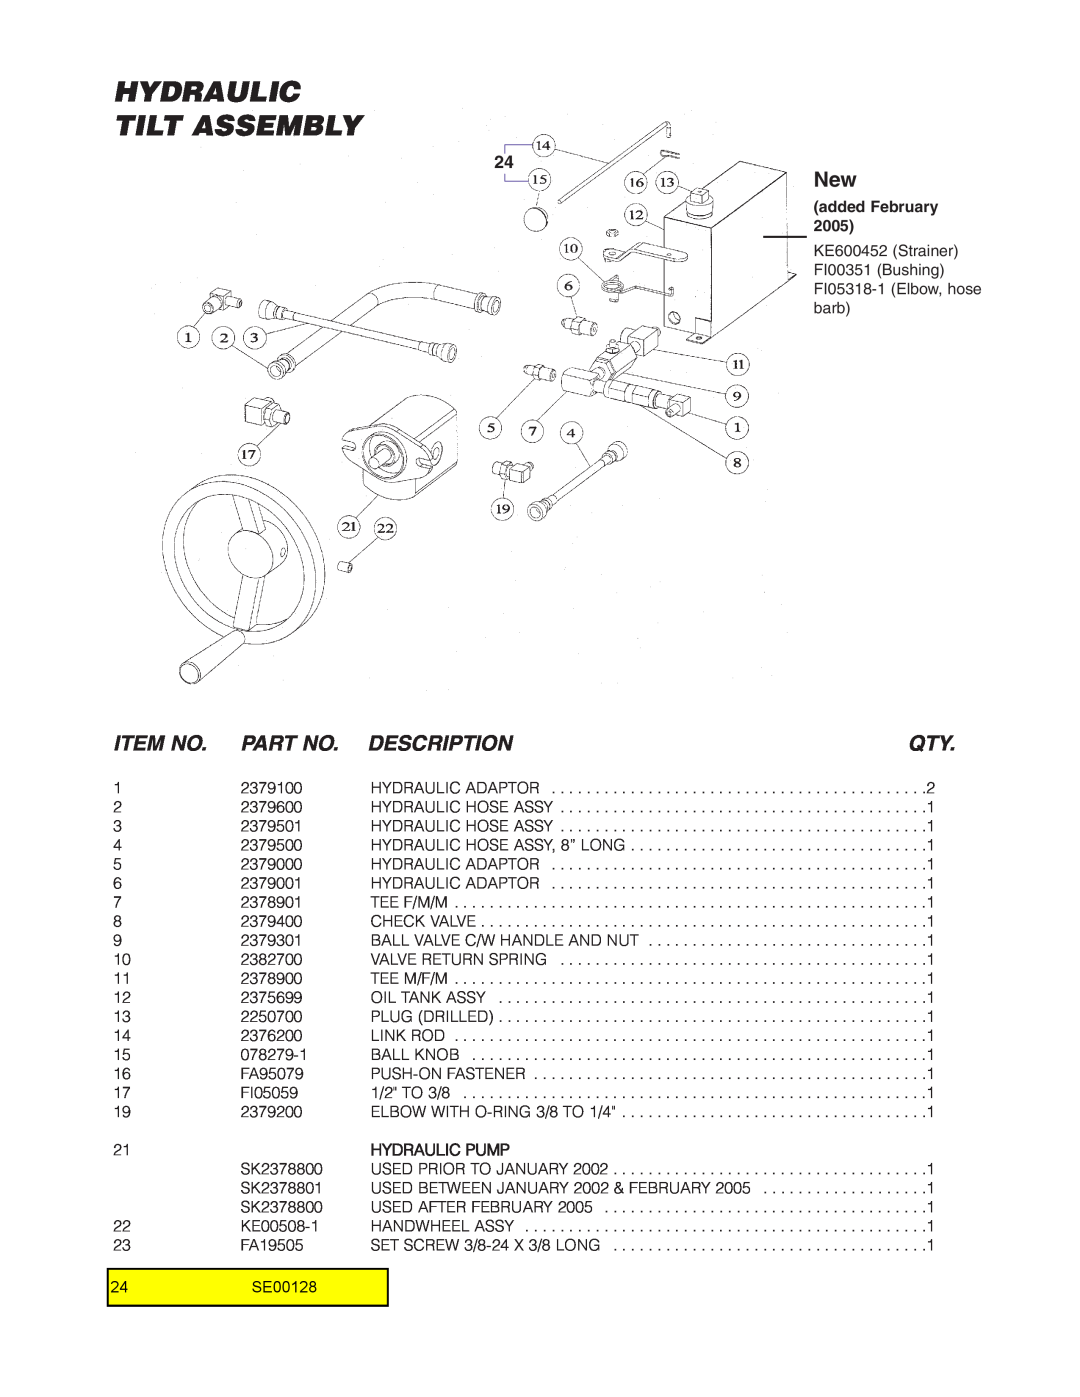 Cleveland Range SGM-30-TR manual Hydraulic Tilt Assembly, Item No, Description, added February, Hydraulic Pump, SE00128 